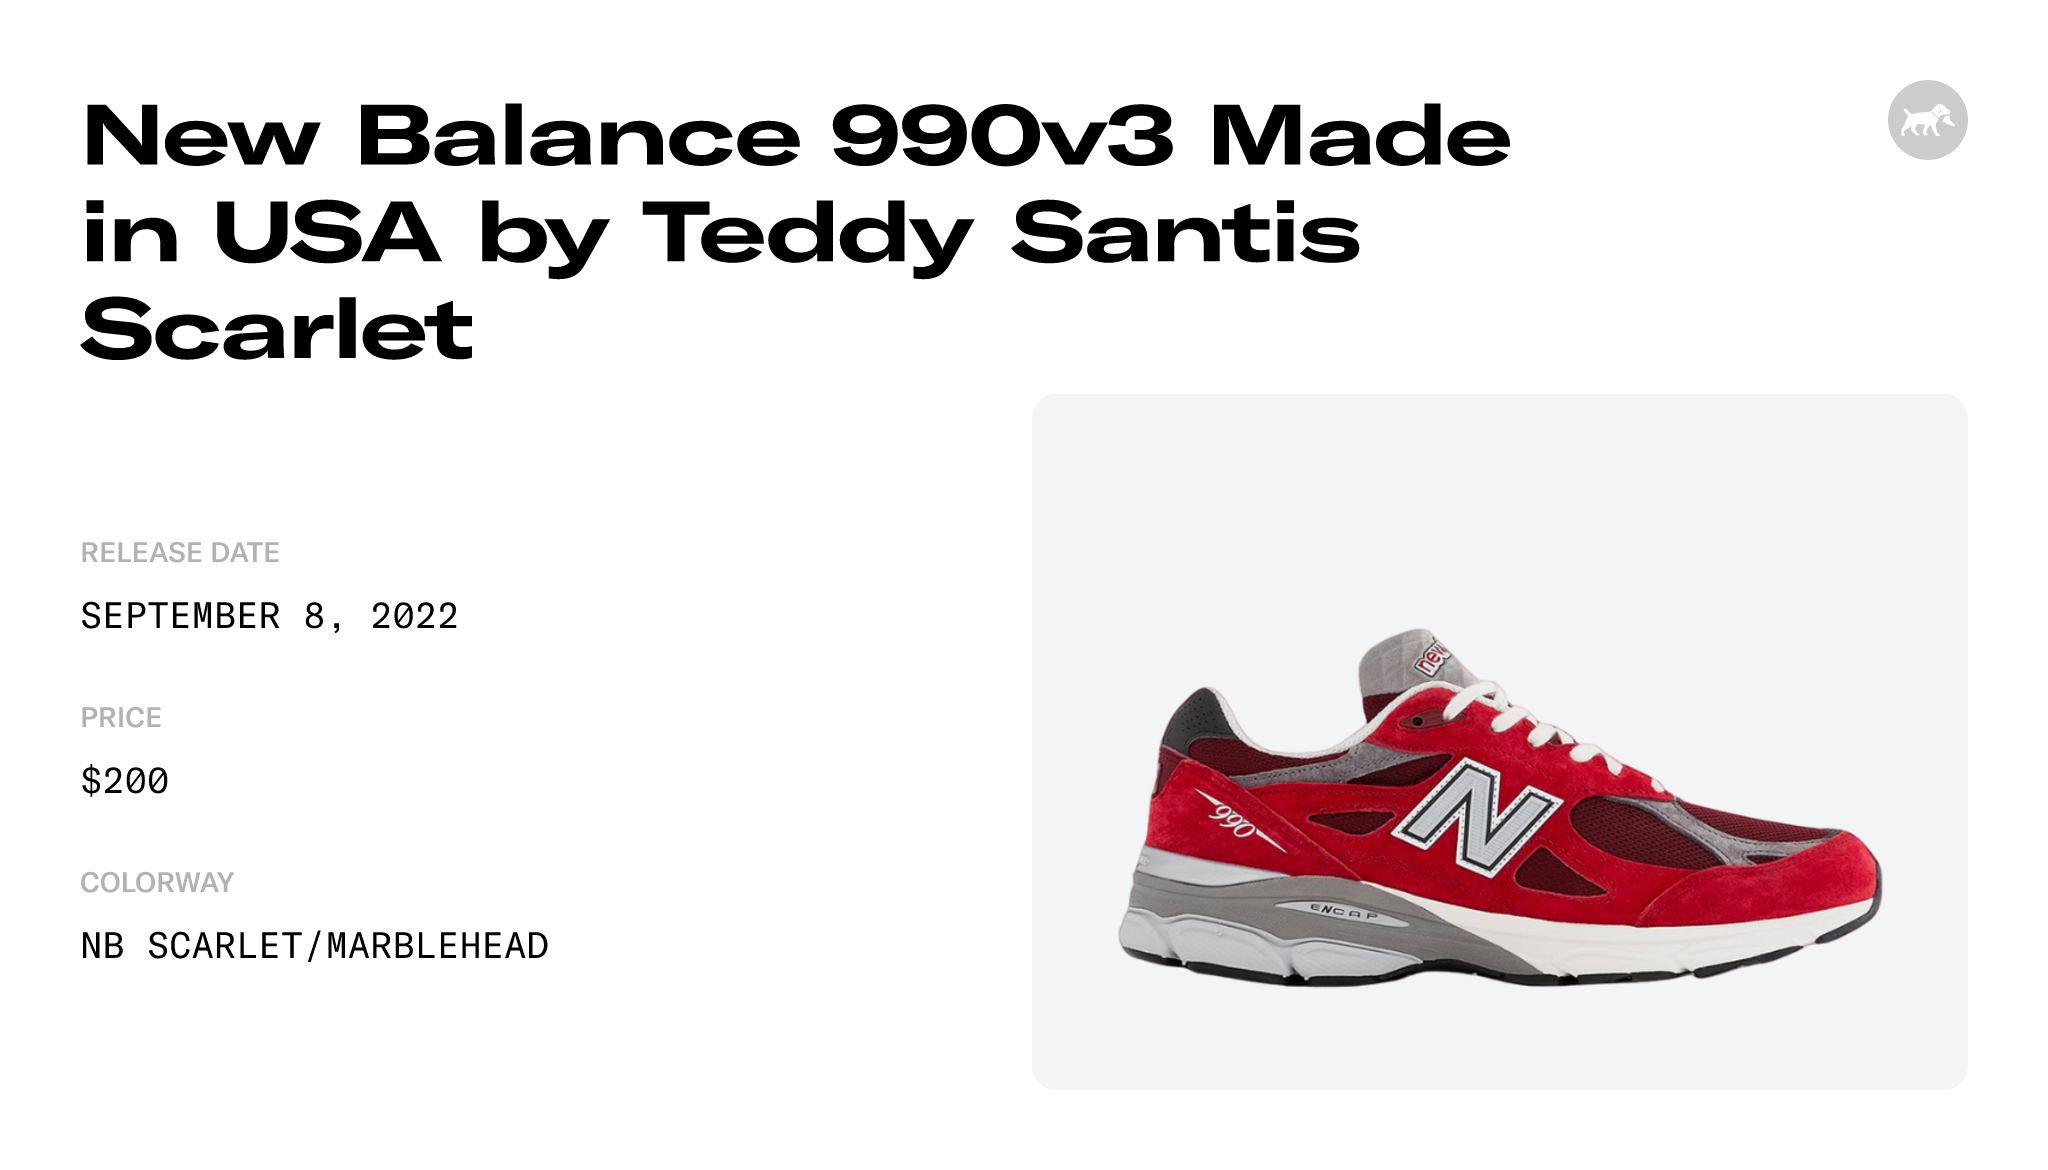 New Balance 990v3 Made in USA by Teddy Santis Scarlet